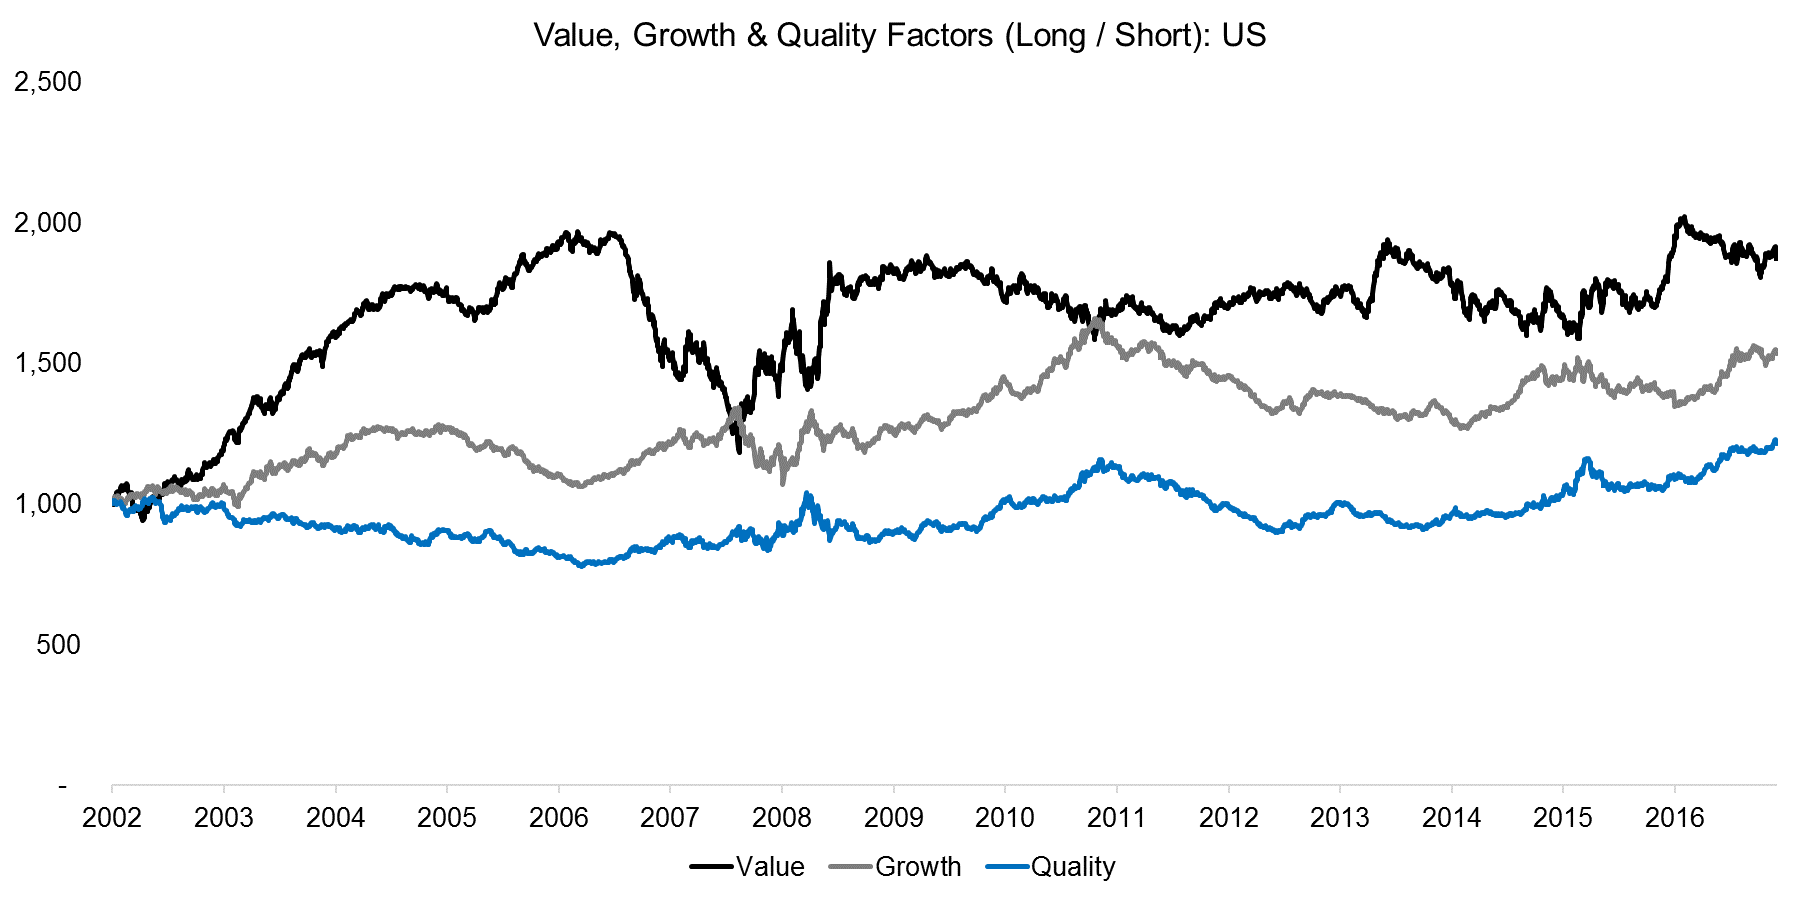 Value, Growth & Quality Factors (Long Short) US